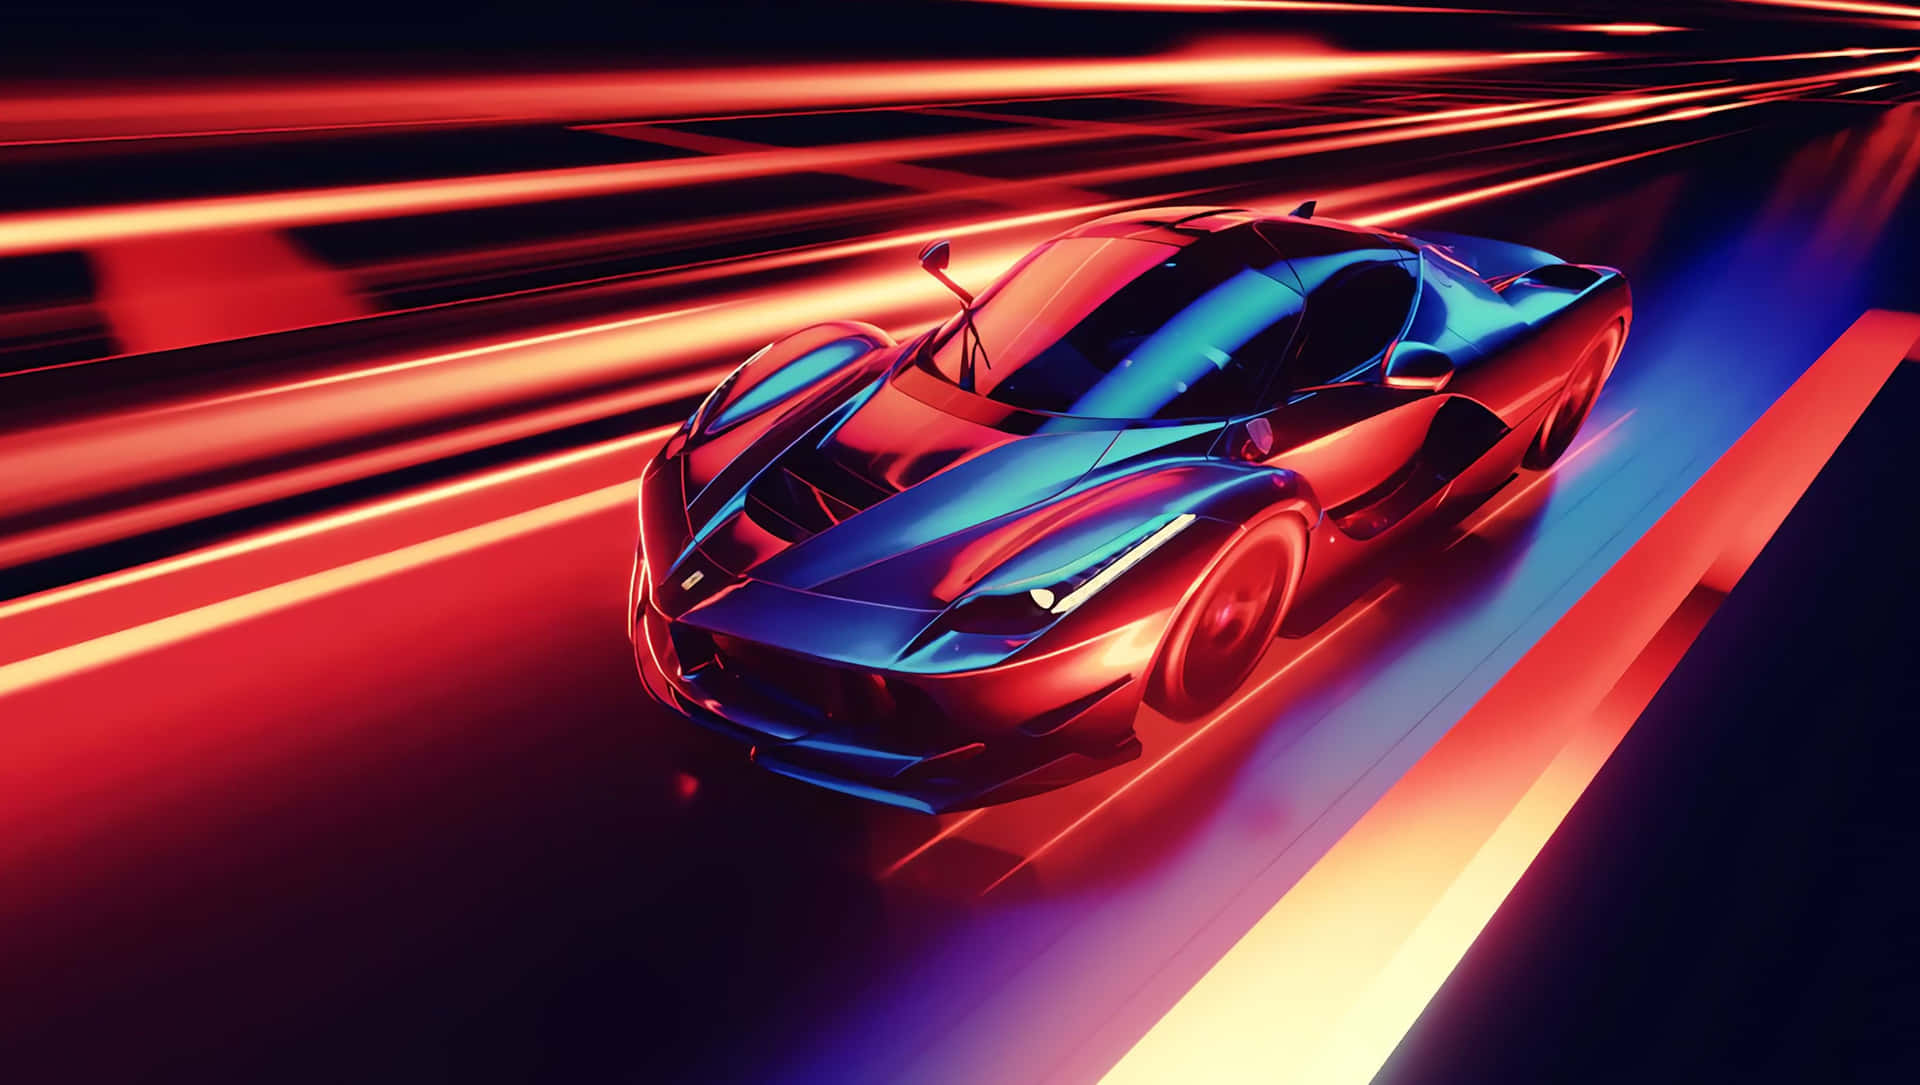 Futuristic Supercar Speed Blur Wallpaper